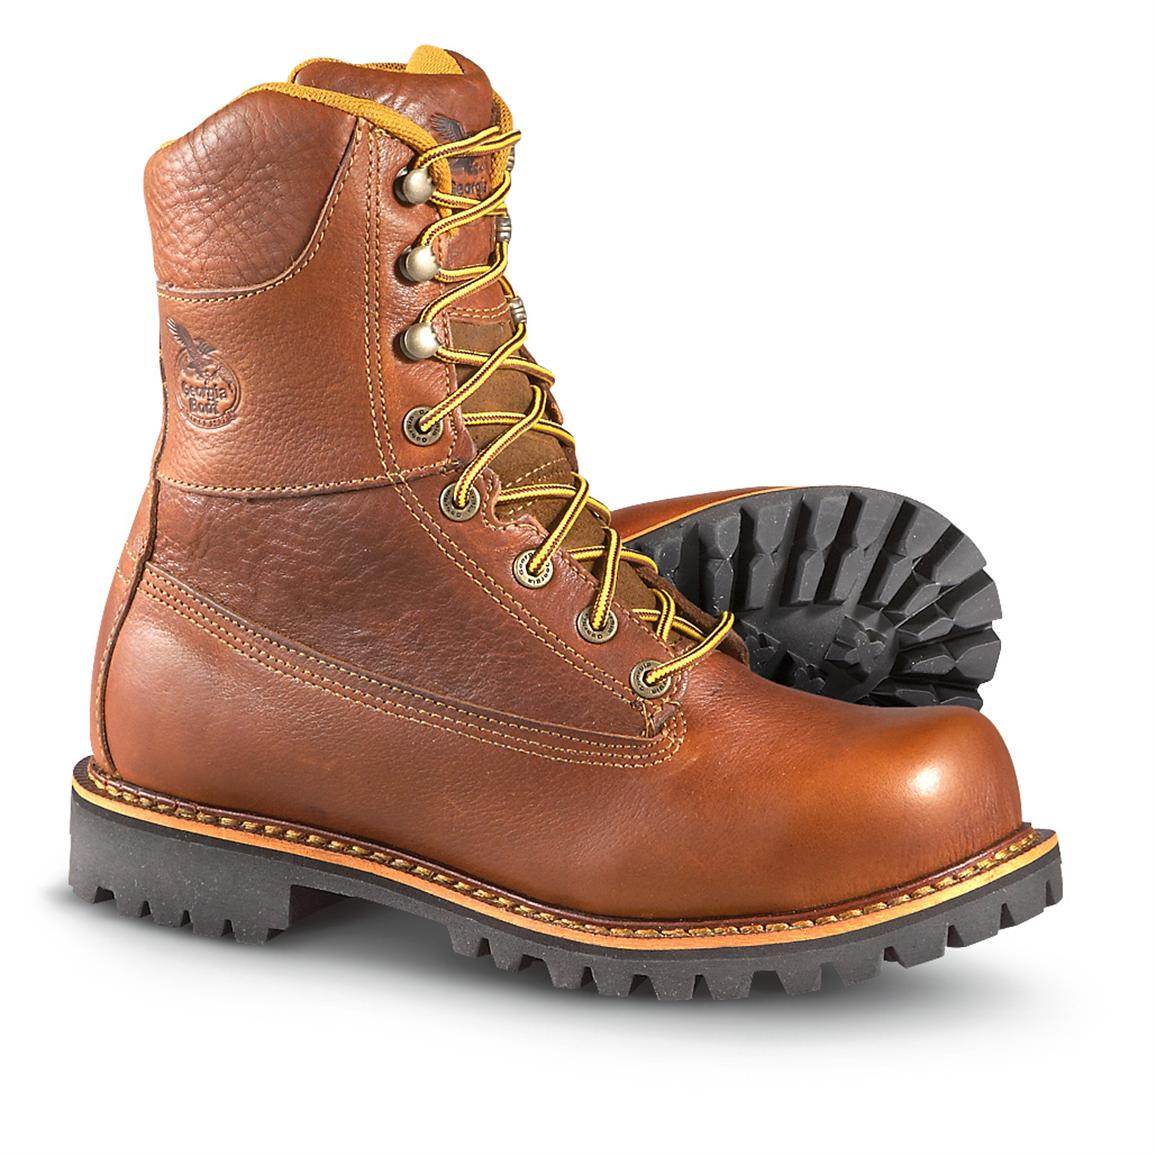 Men's Georgia Boot® Chieftan Steel Toe Work Boots, Saddle 